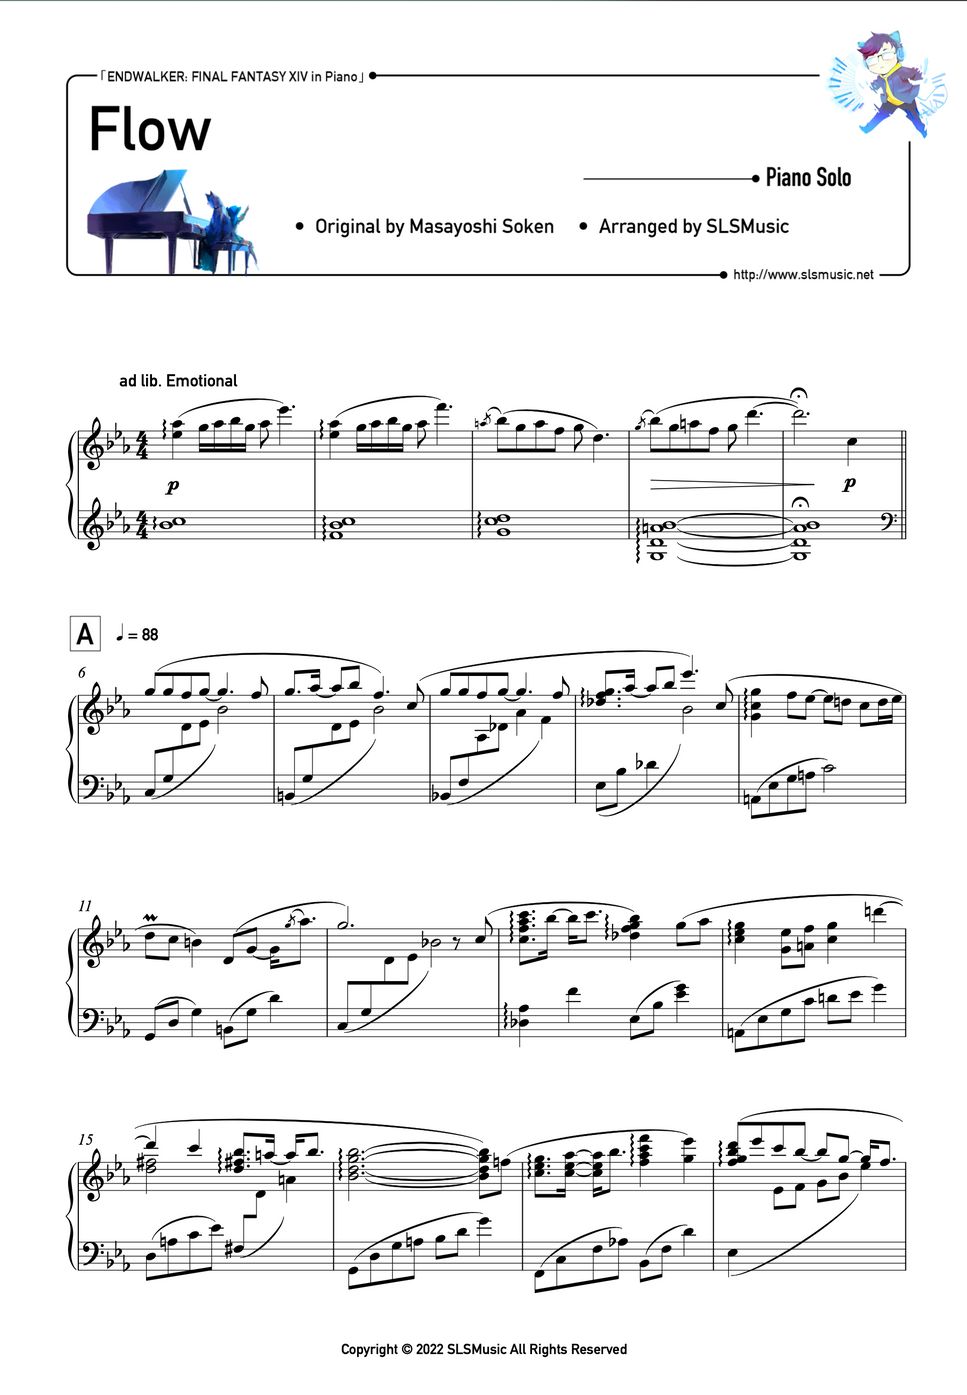 FINAL FANTASY XIV - ENDWALKER: FINAL FANTASY XIV in Piano (Masayoshi Soken) by SLSMusic